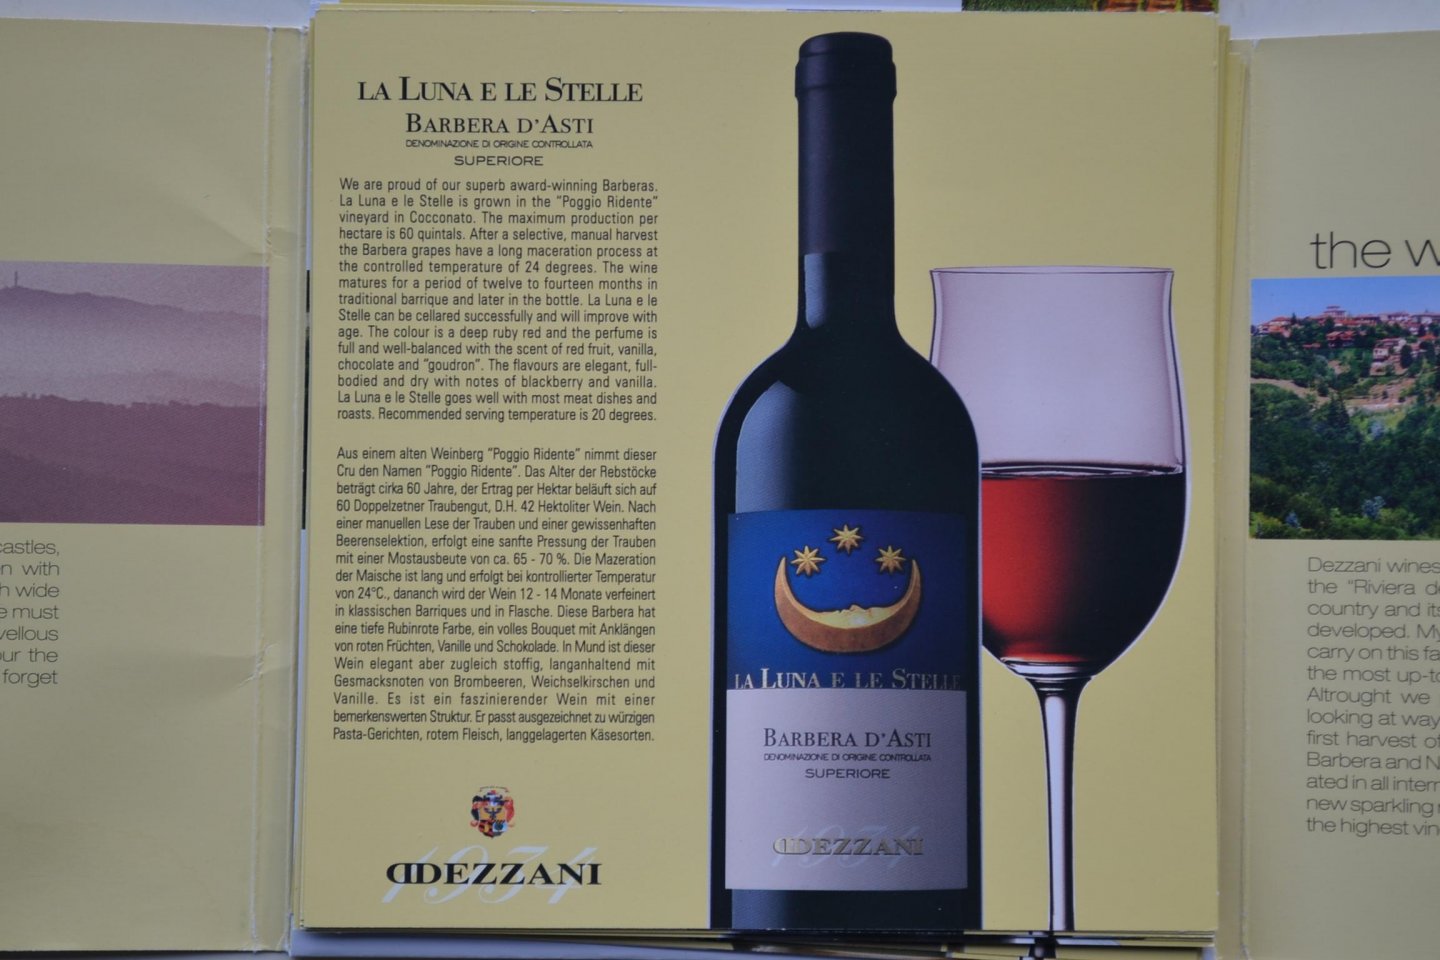 Dezzani, Louigi - Adezzani the vineyards and the wines